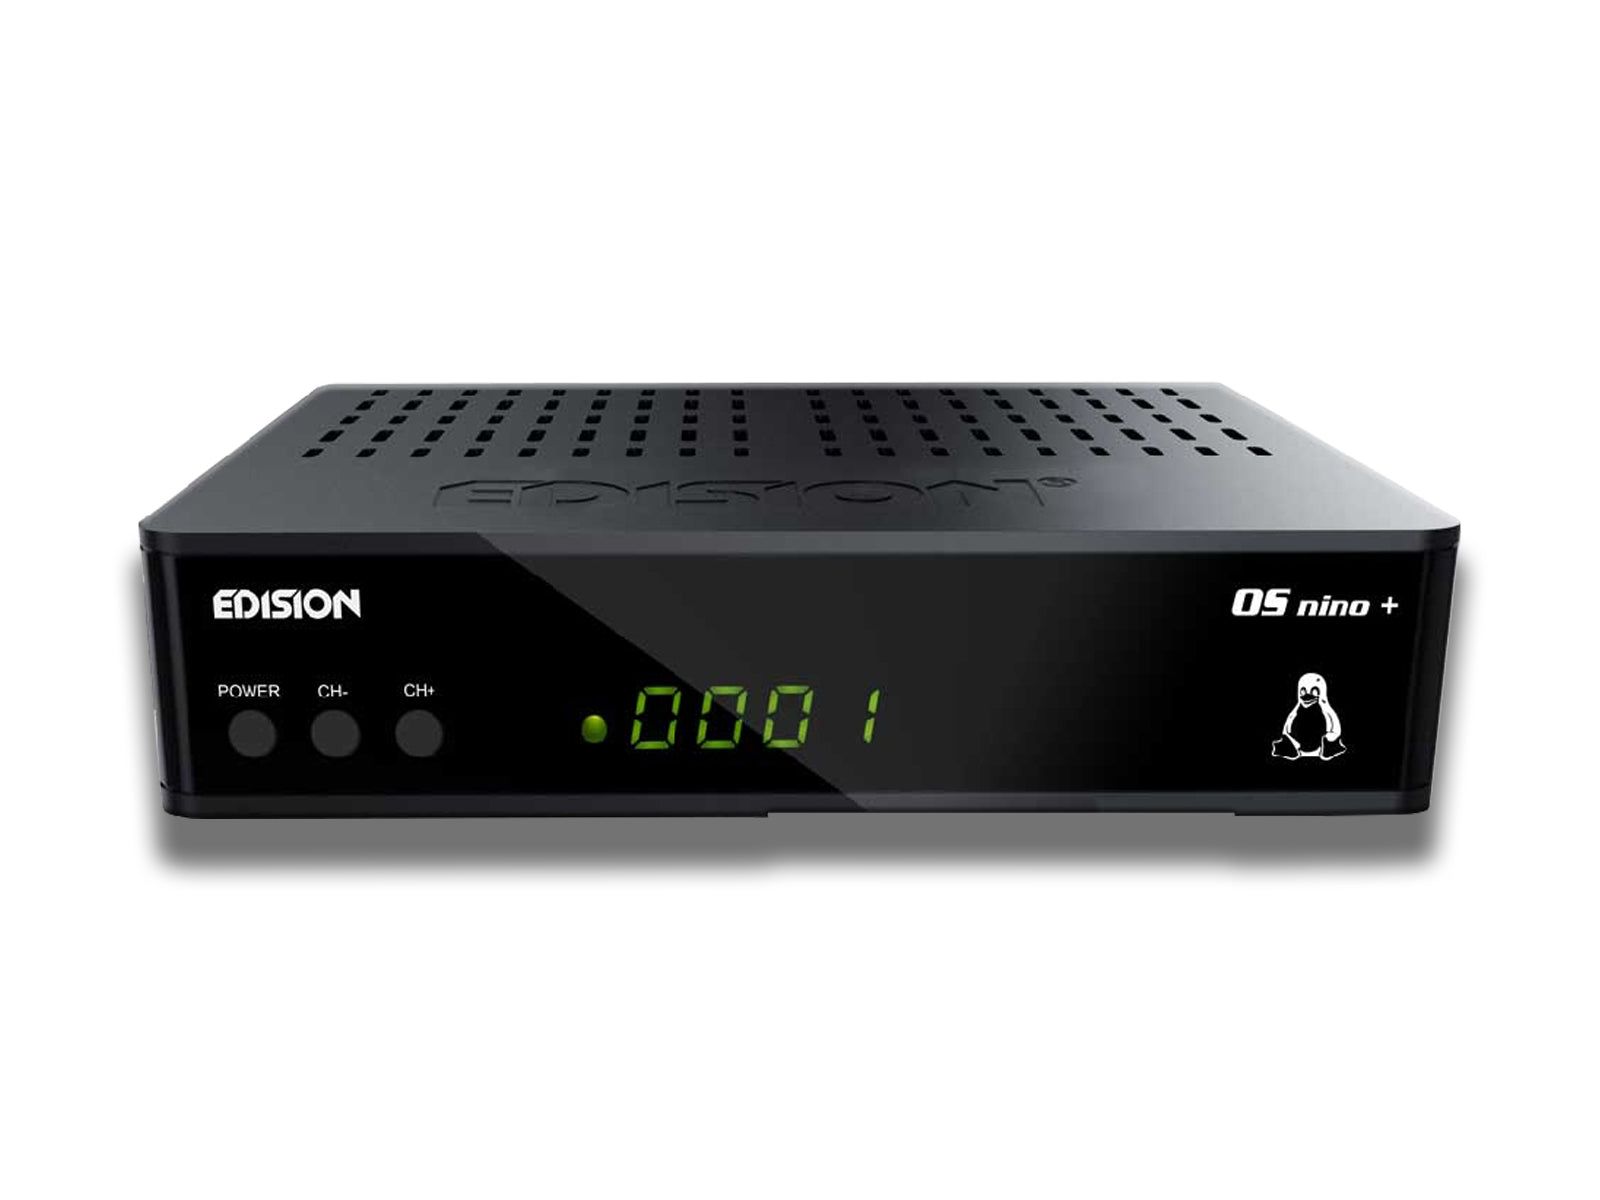 Edision Picco T265 FullHD DVB-T2 H265 HEVC 10 Bit digital terrestrial  receiver (Pack 2 units)